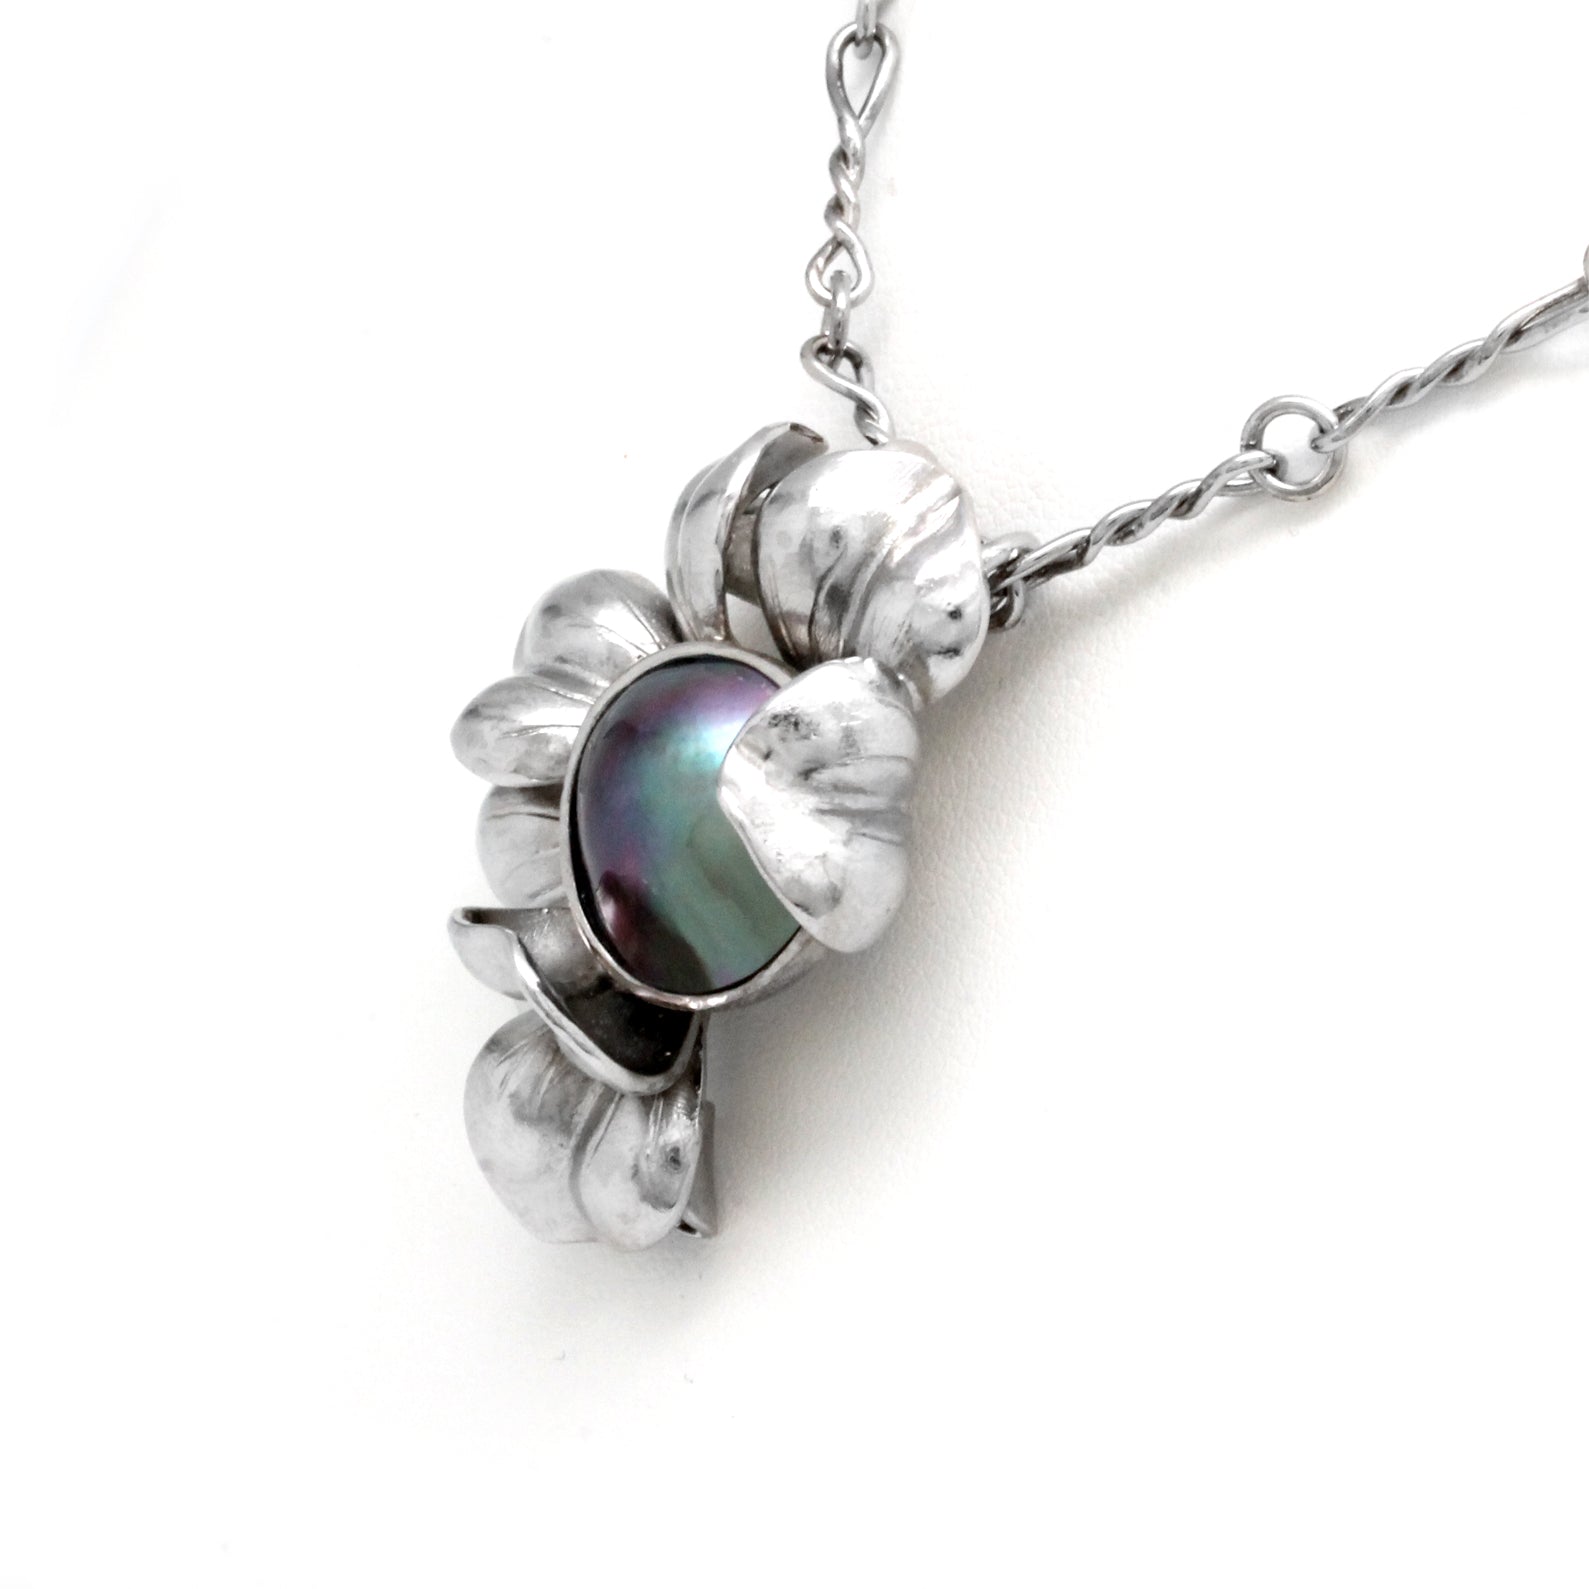 "Xochitl" Beautiful Multicolored Cortez Mabe Pearl on Silver Pendant/Brooch and Chain by "Hector Salgado"